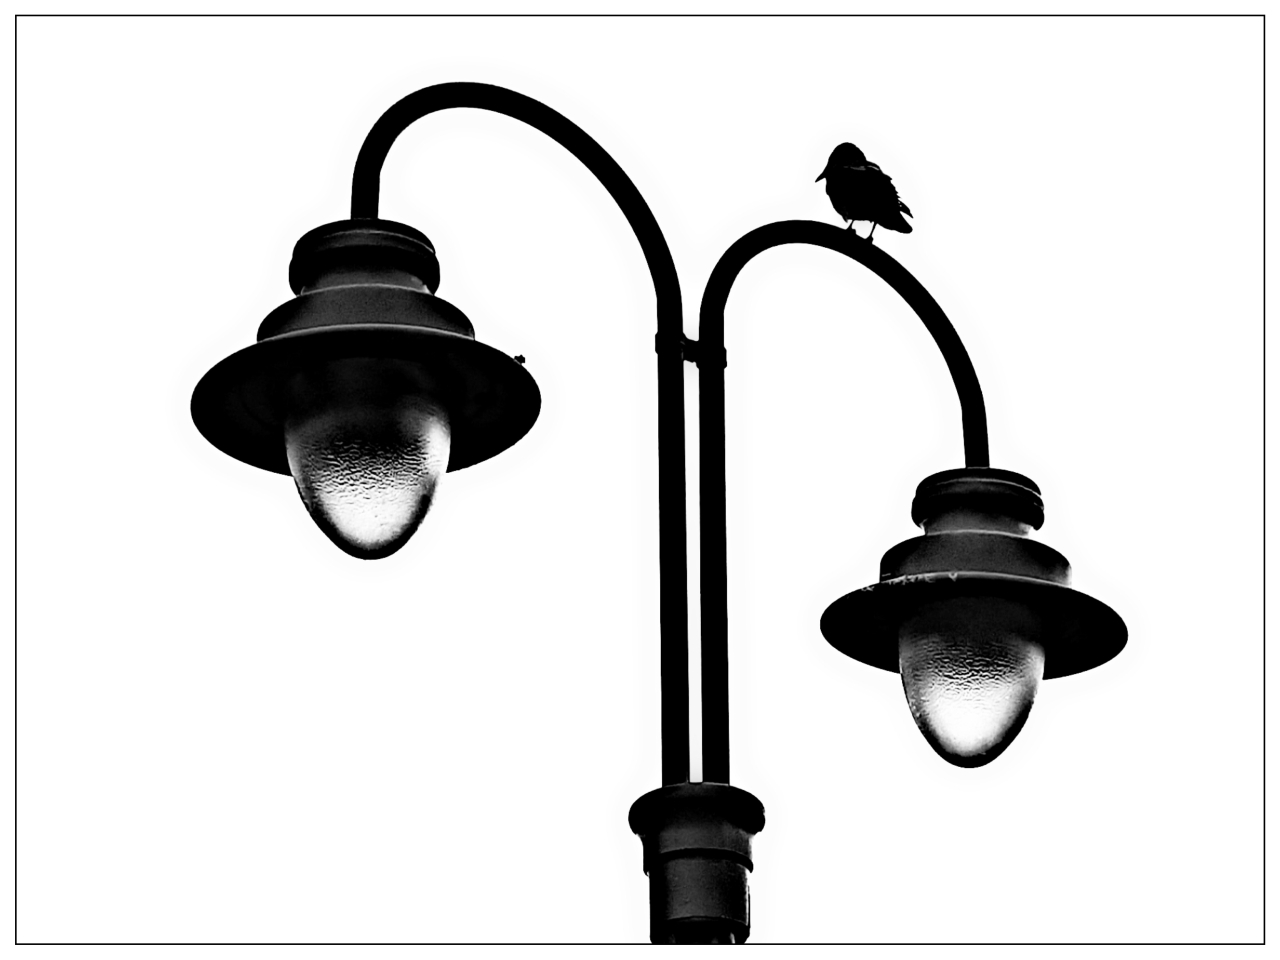 BIRD AND LAMP 3.jpg